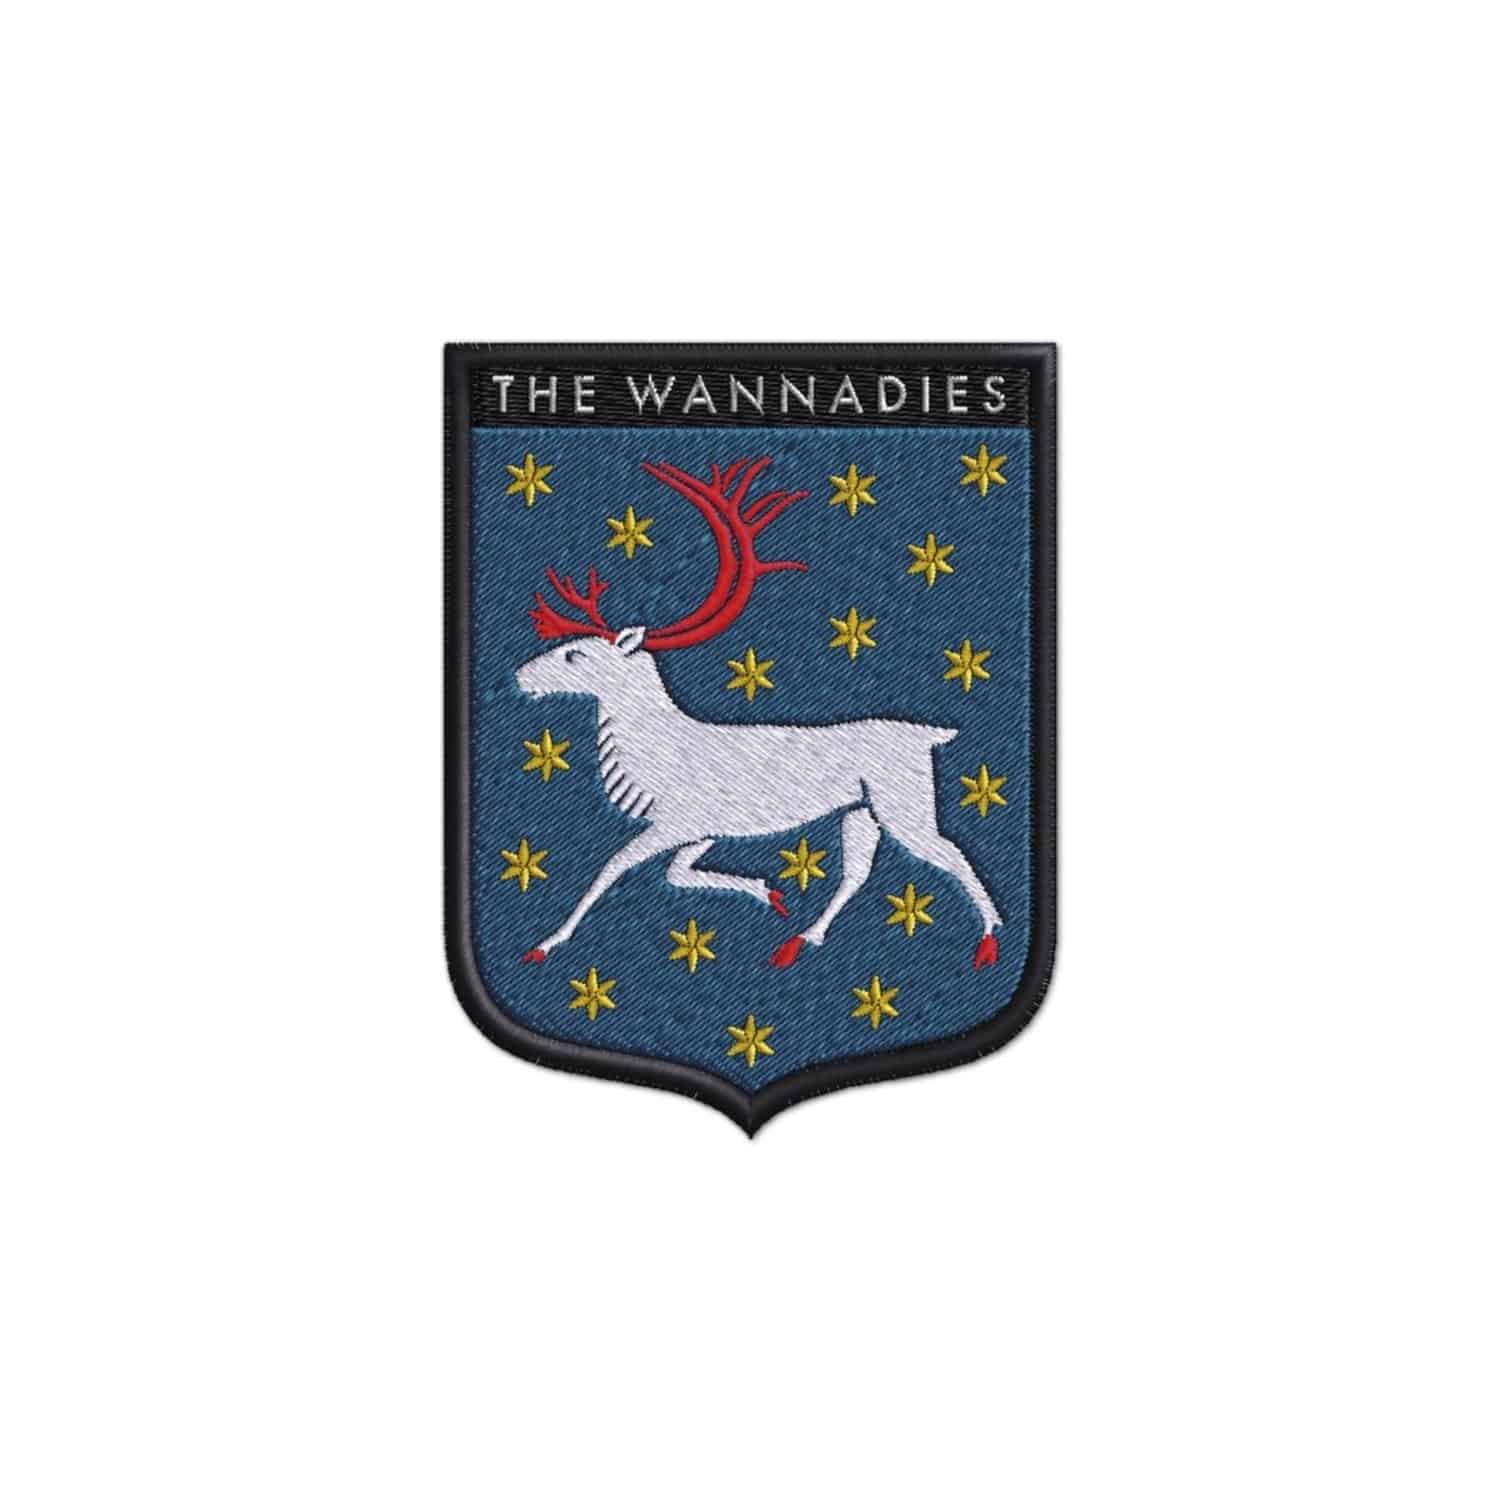 The Wannadies - VSTERBOTTEN 